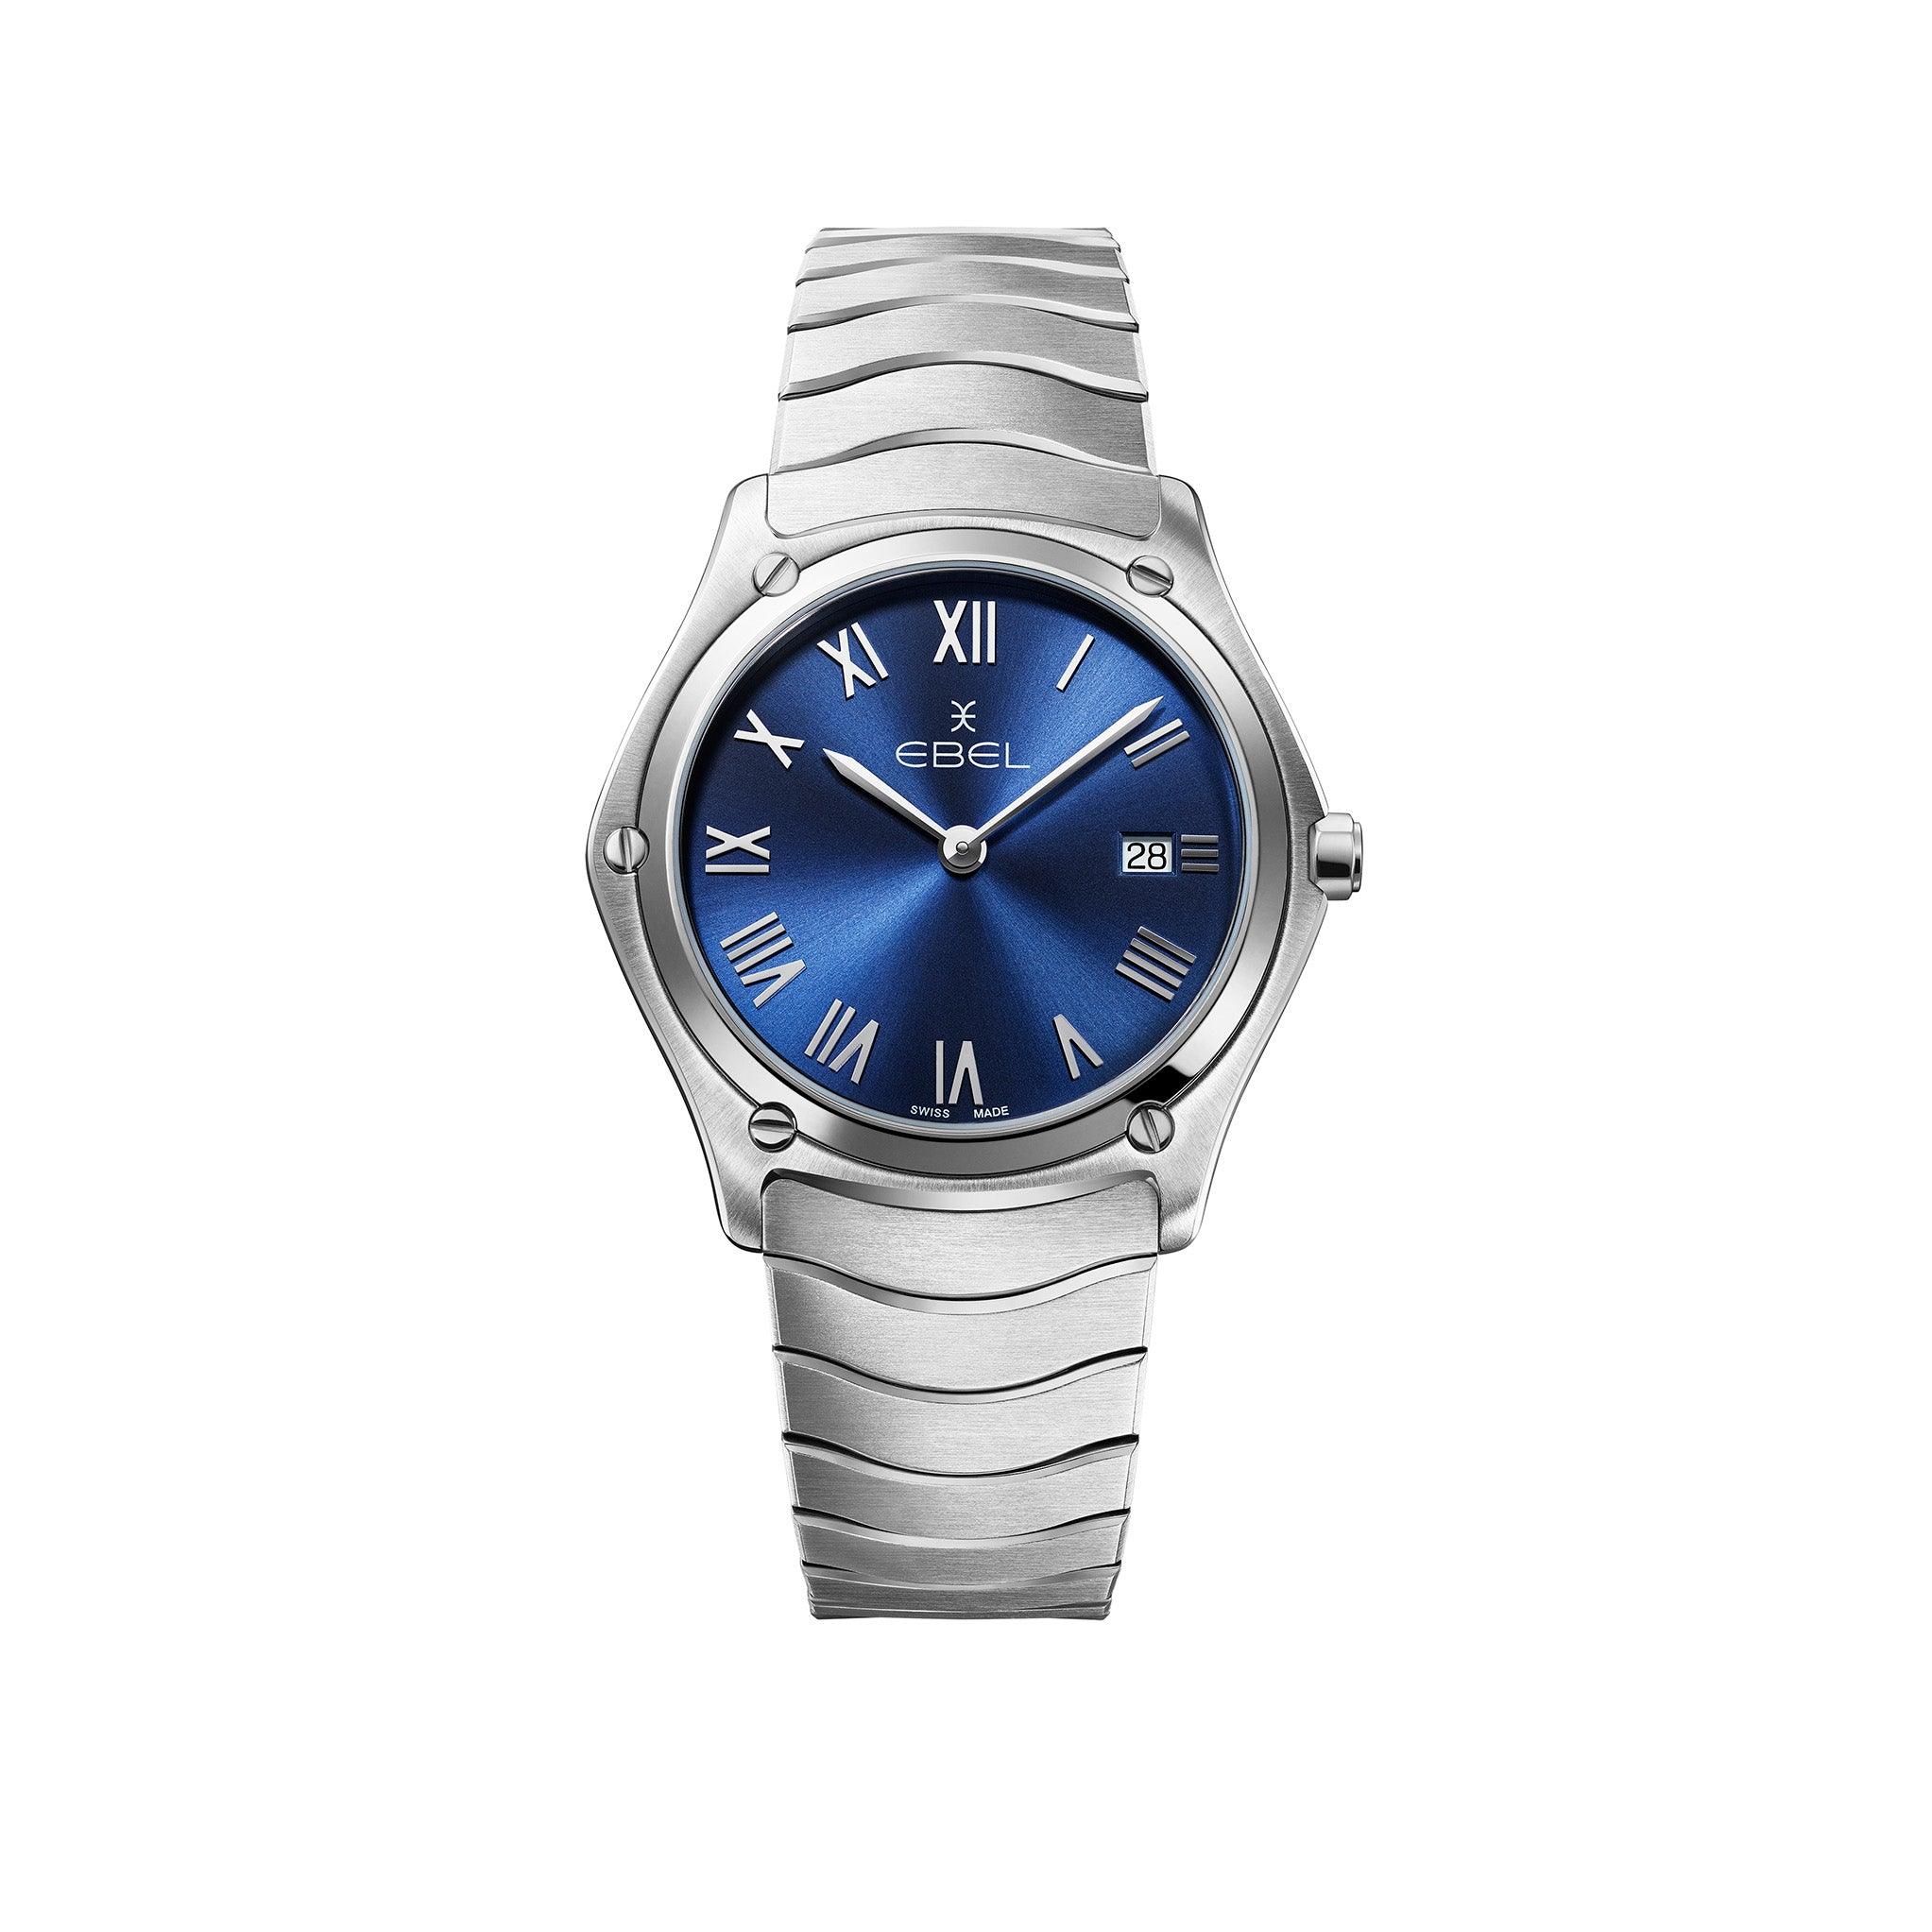 Sell my Ebel watch – Anywatchforcash